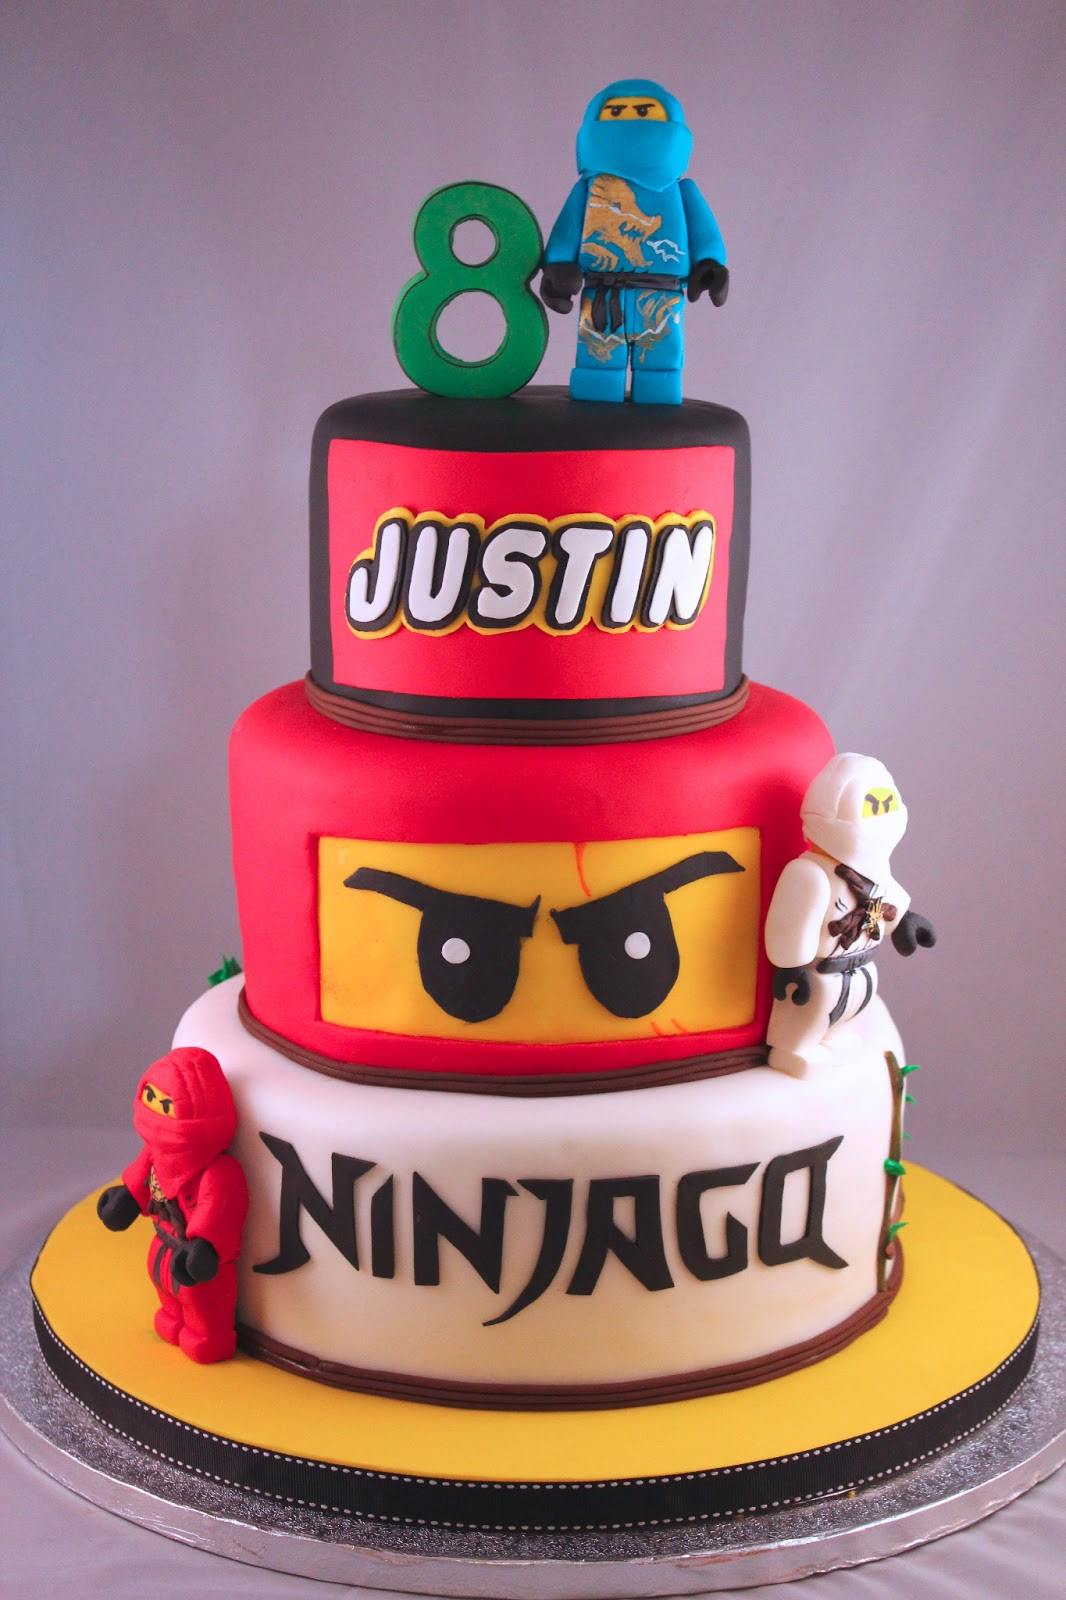 Ninjago Birthday Cake
 Yummy Thingy Justin s Ninjago Cake